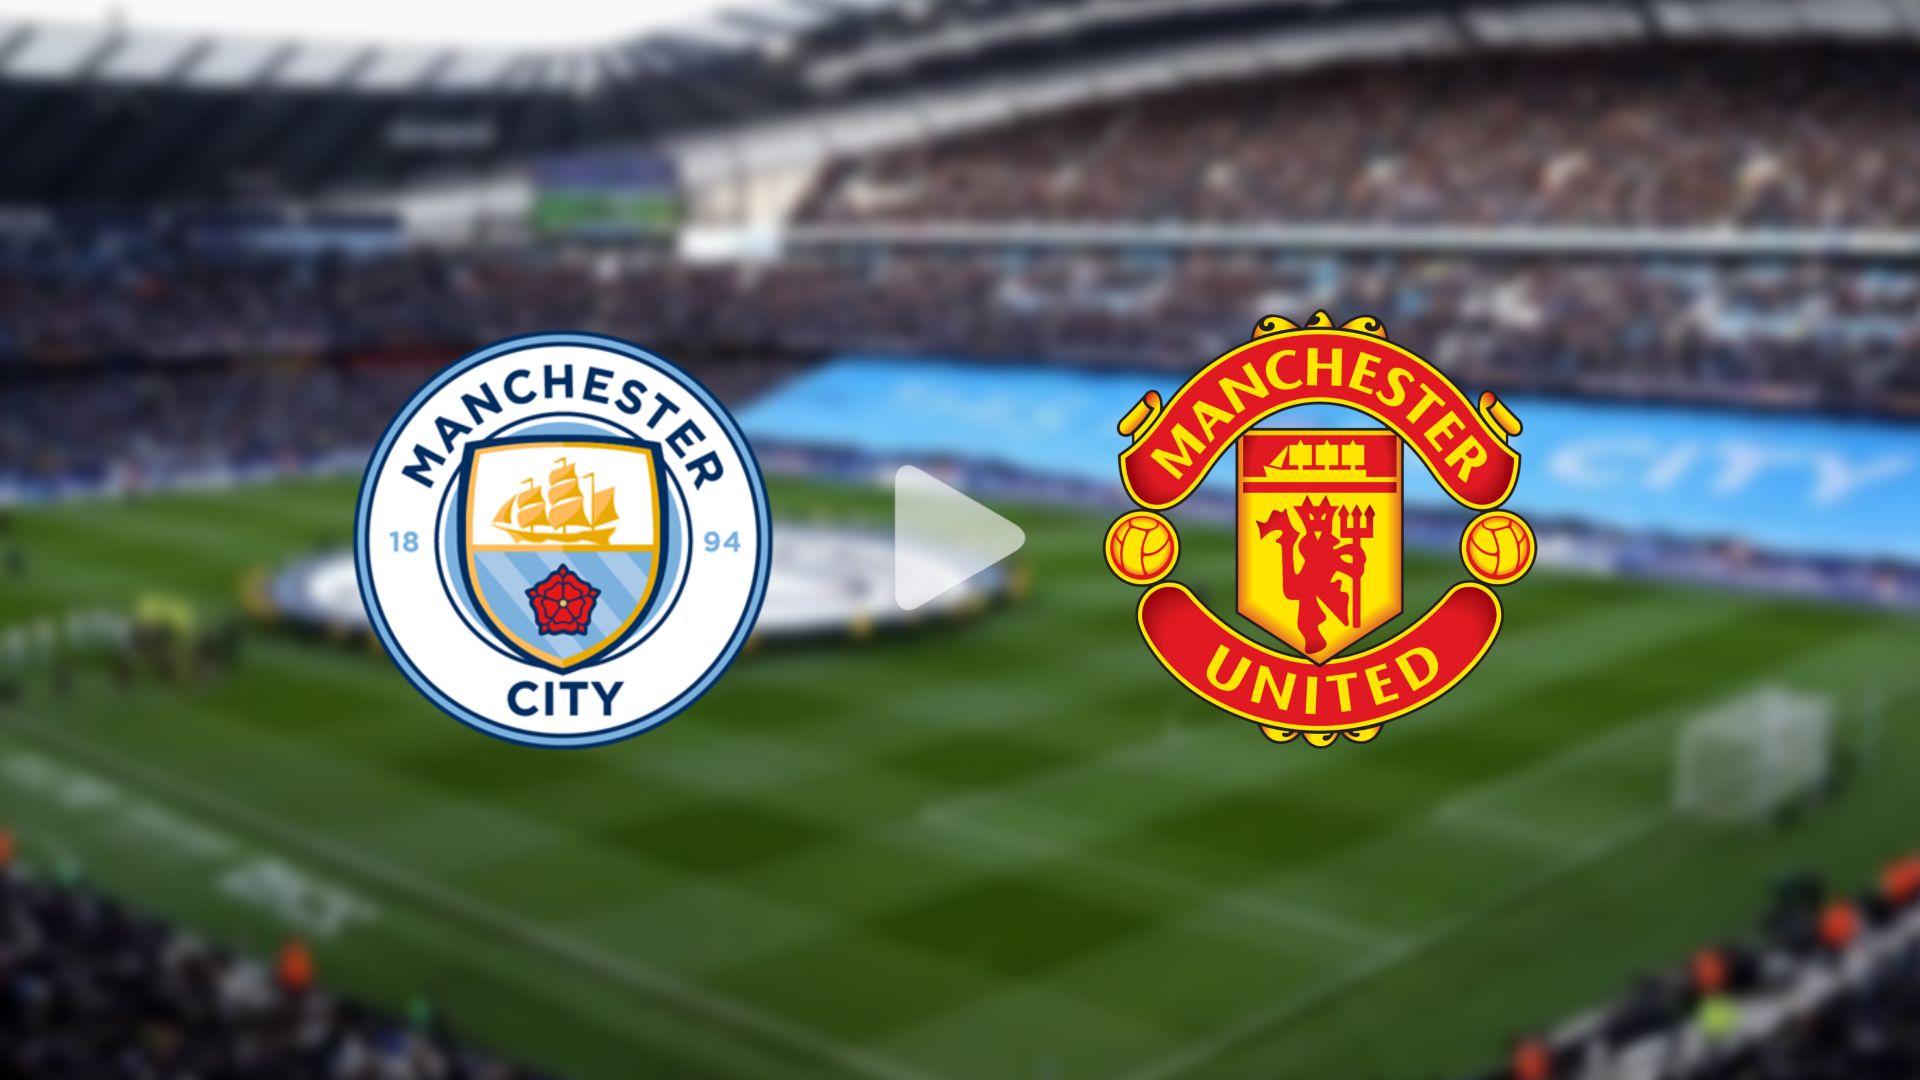 Link Streaming Manchester City vs Manchester United Gratis Bukan Koora Live Streaming Bola dan Twitter